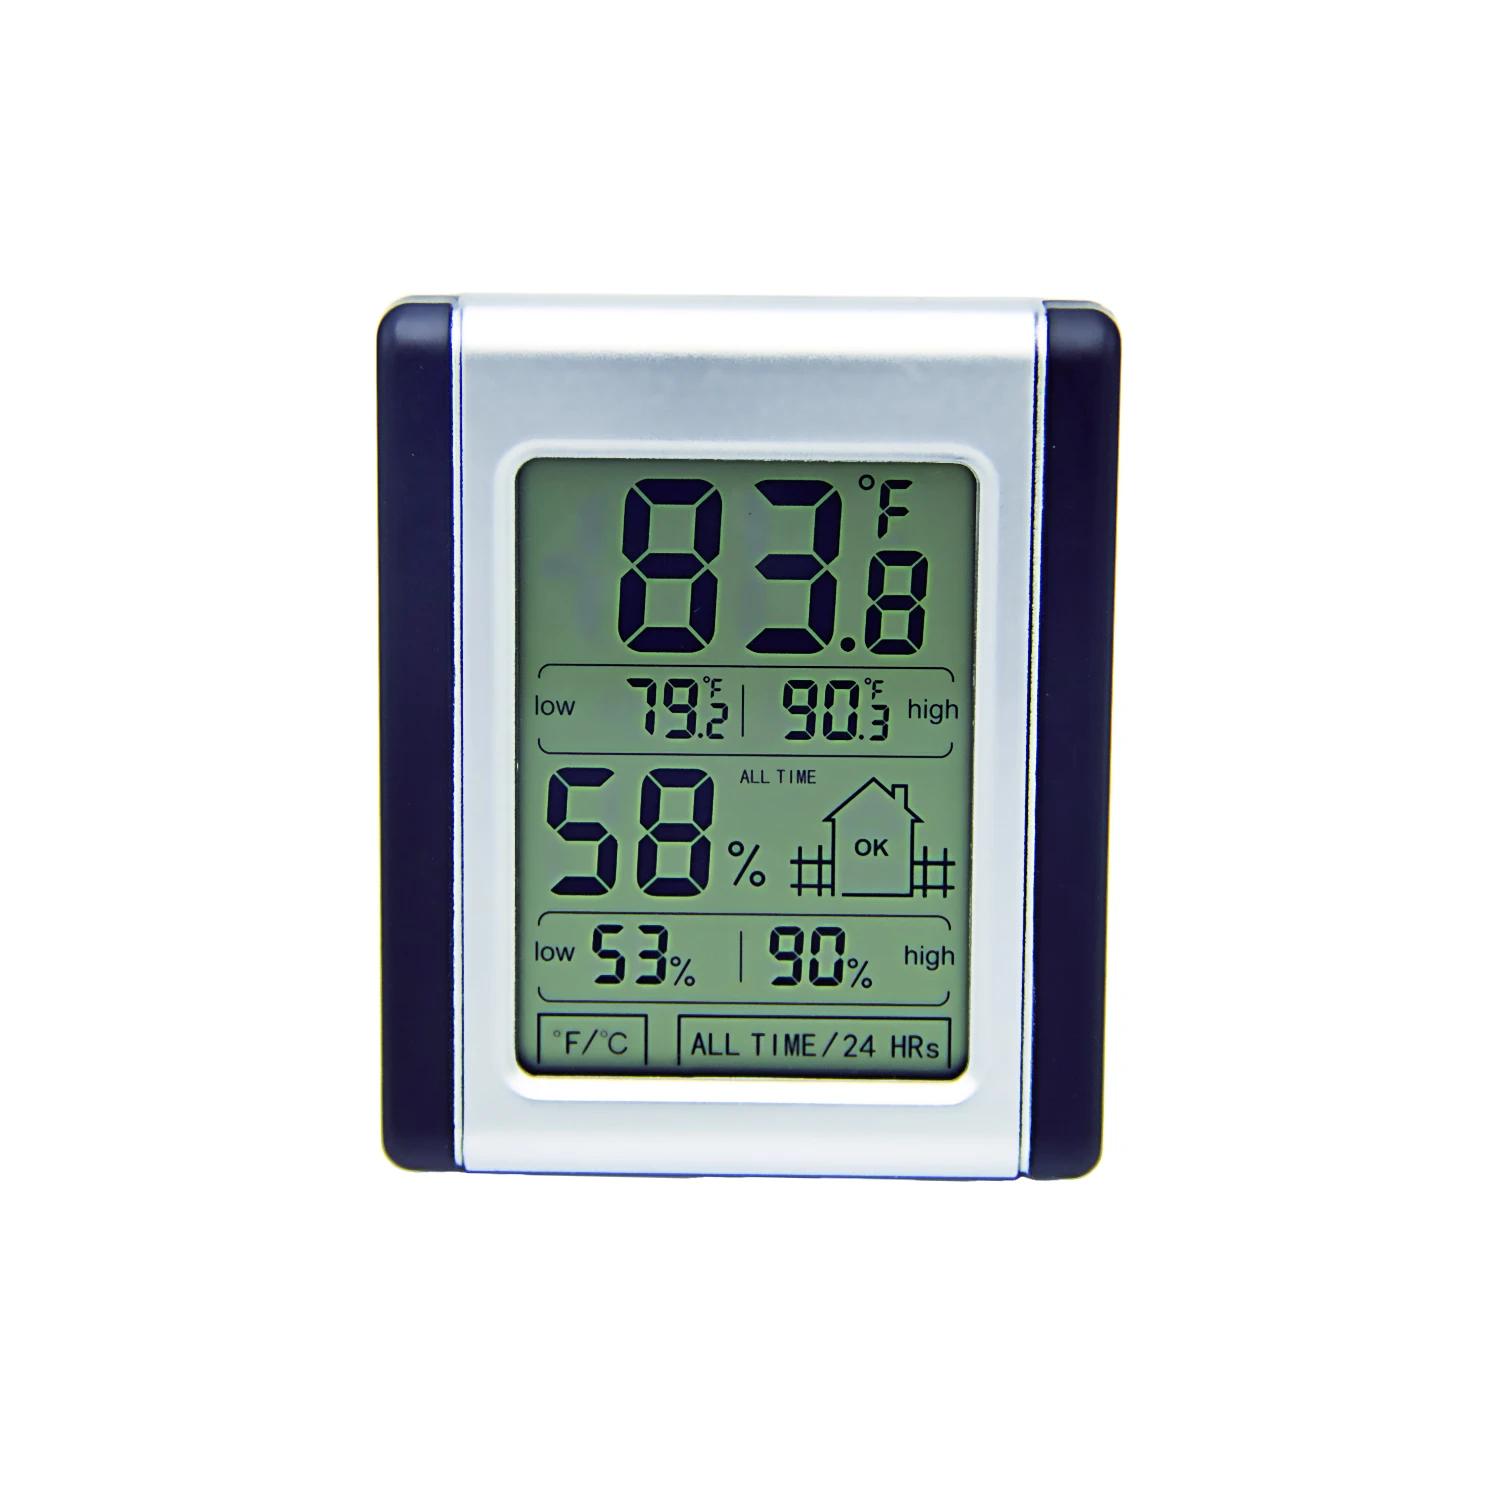 Slimme Ontwerp Digitale Lcd Display Touchscreen Thermometer Hygrometer met Max Min Record Functie